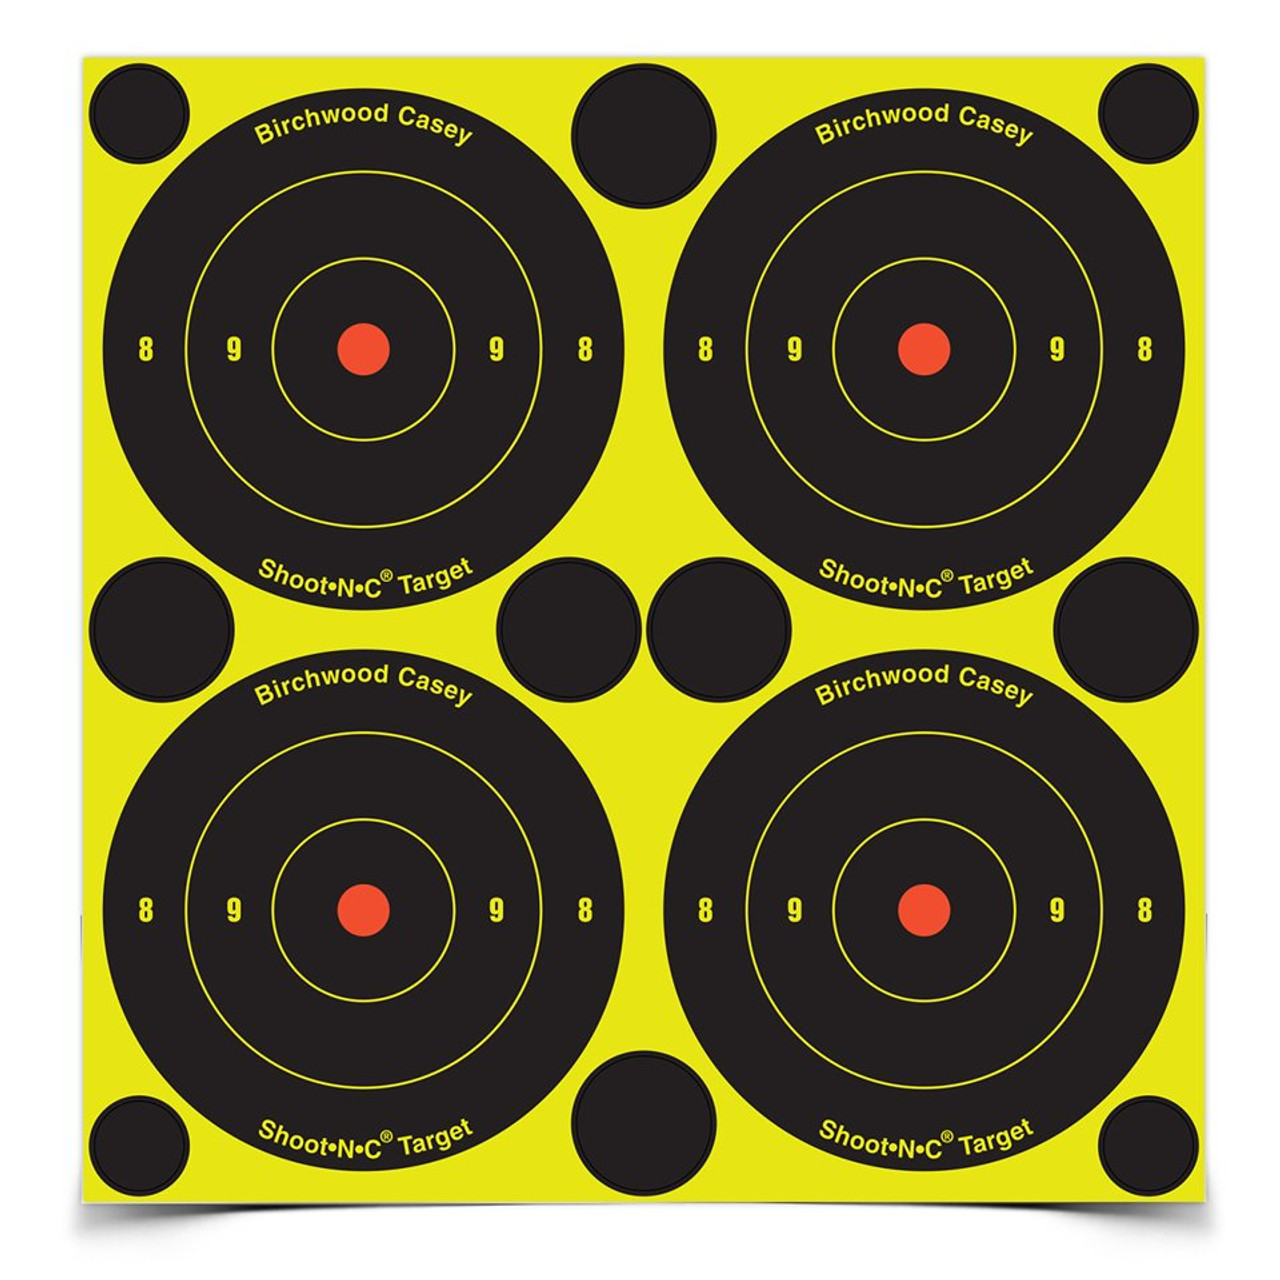 Bulls Eye 3" targets (12 sheets) Shoot N C reactive targets